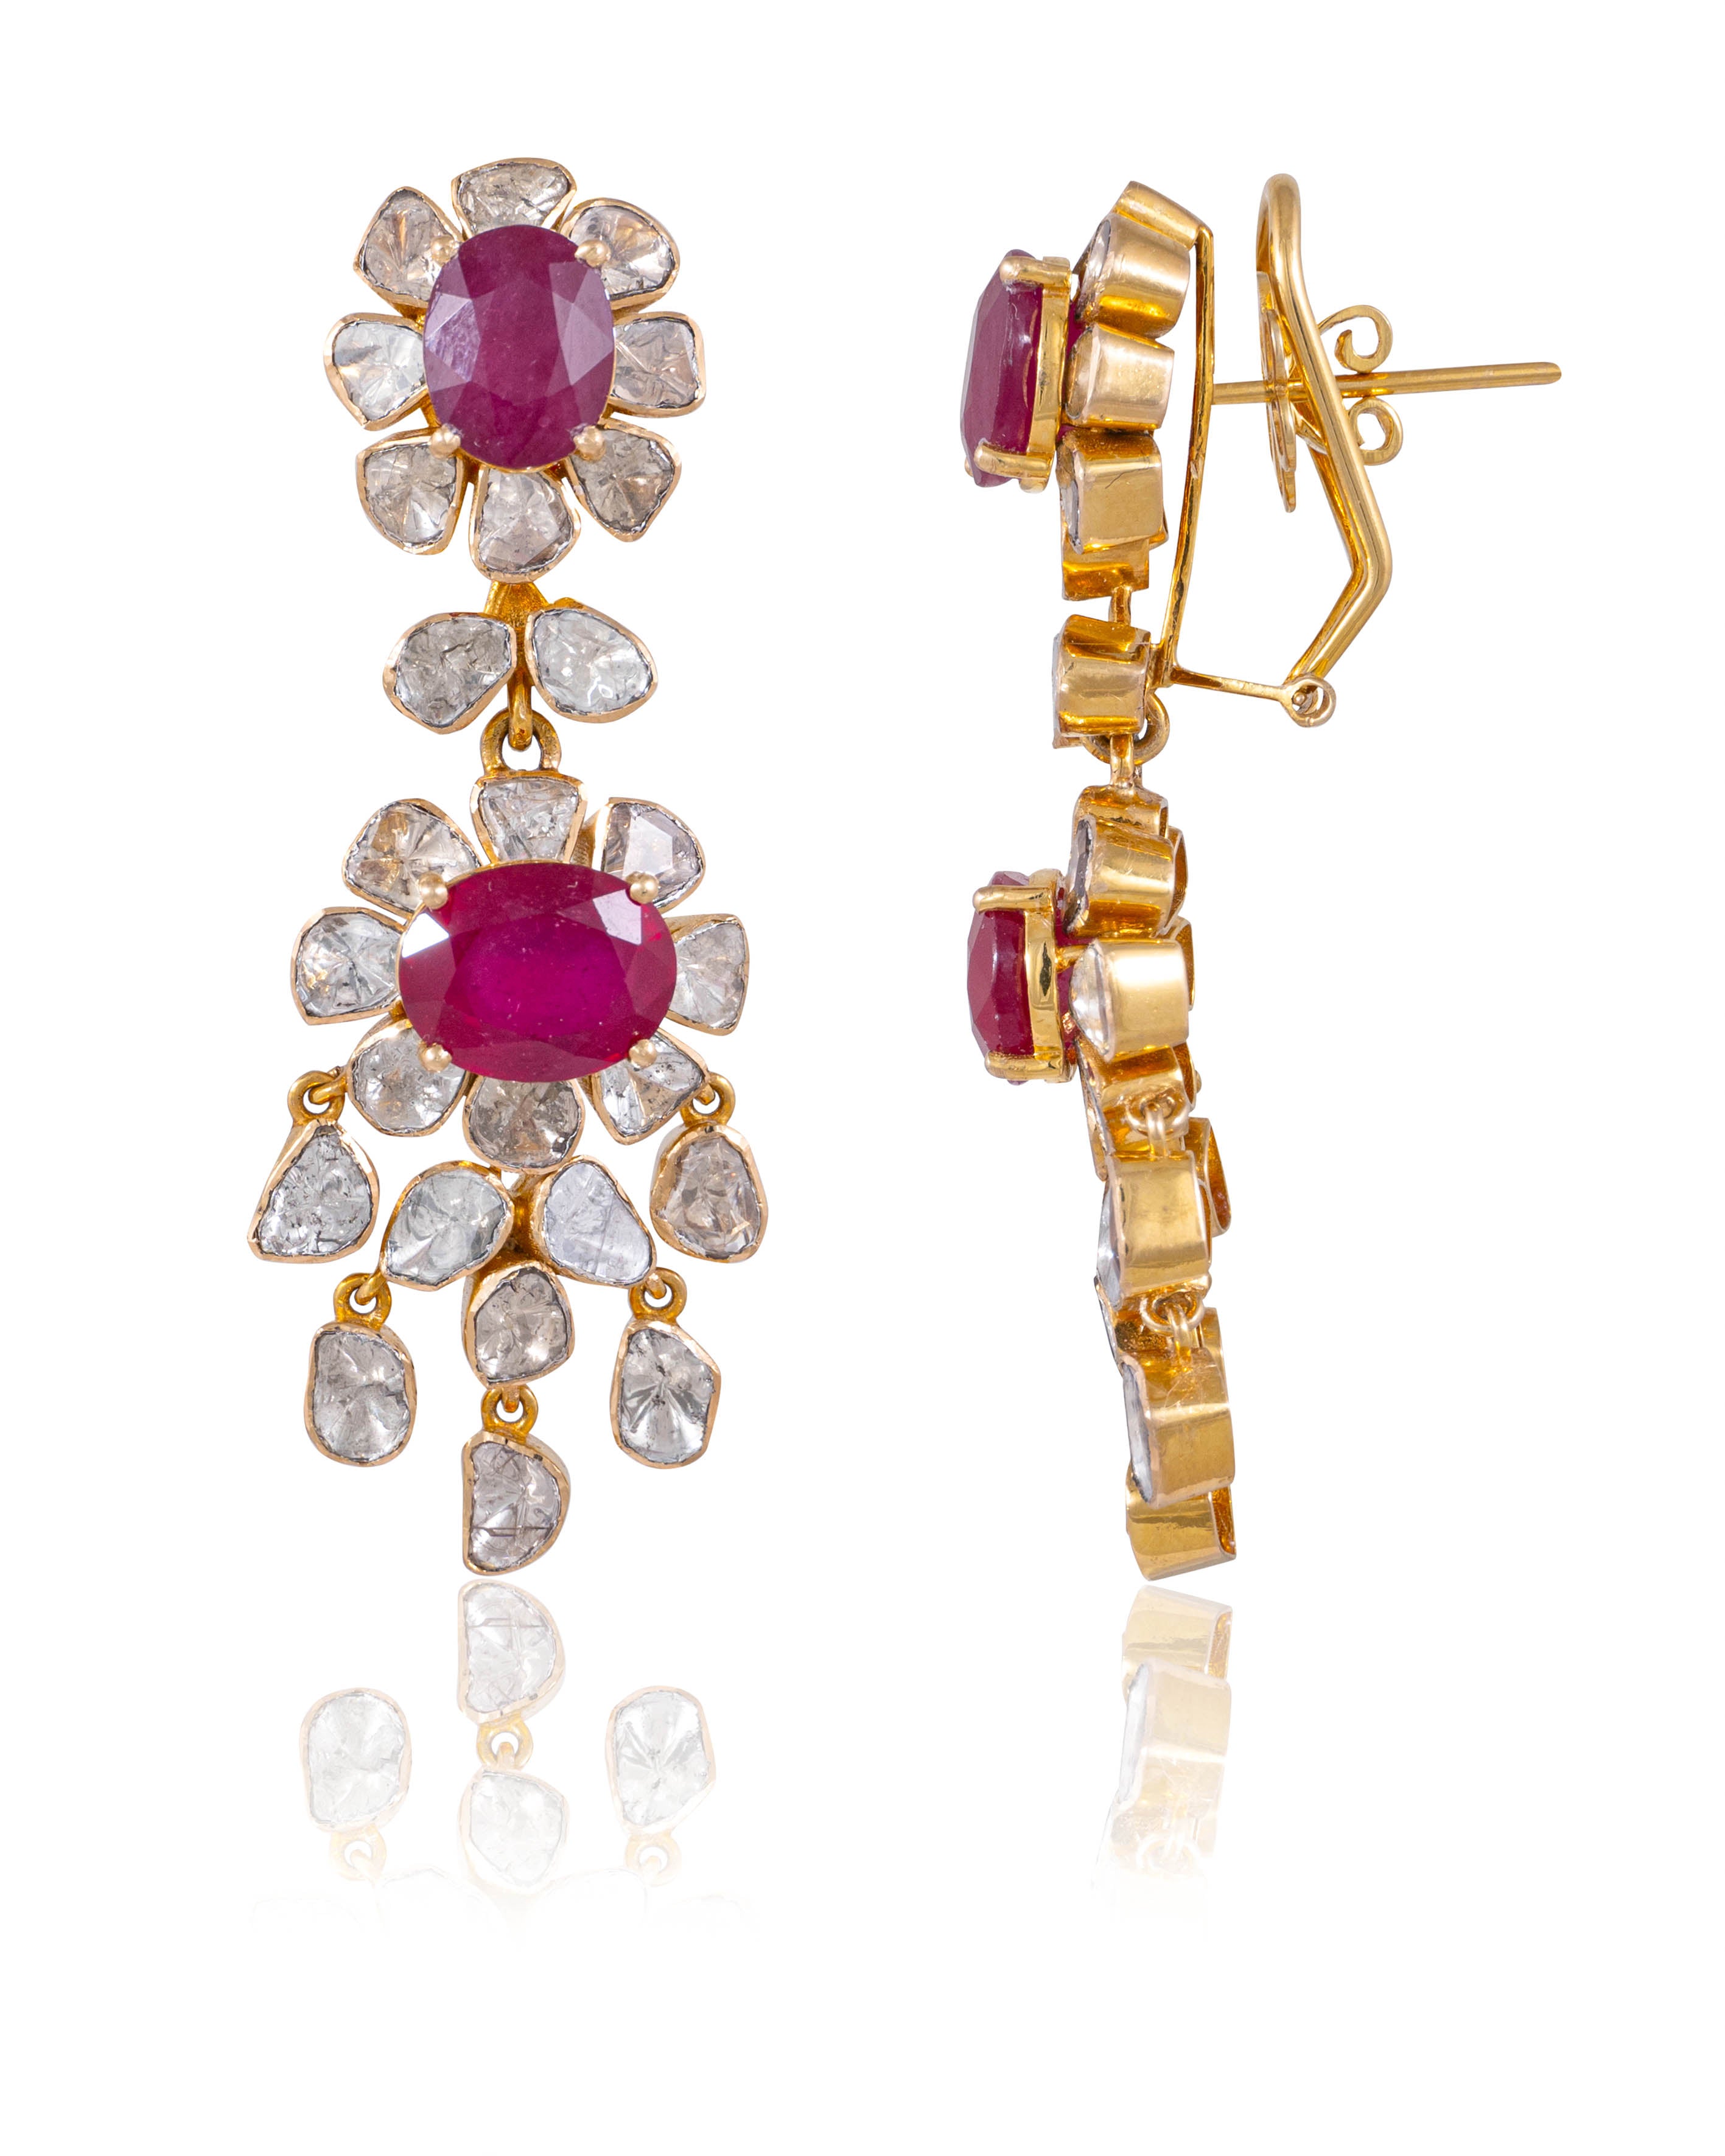 Tanishq latest 2022 Gold & Kundan Polki earrings with Price  #jhumkikidesignnew #antiquegoldjewellery - YouTube